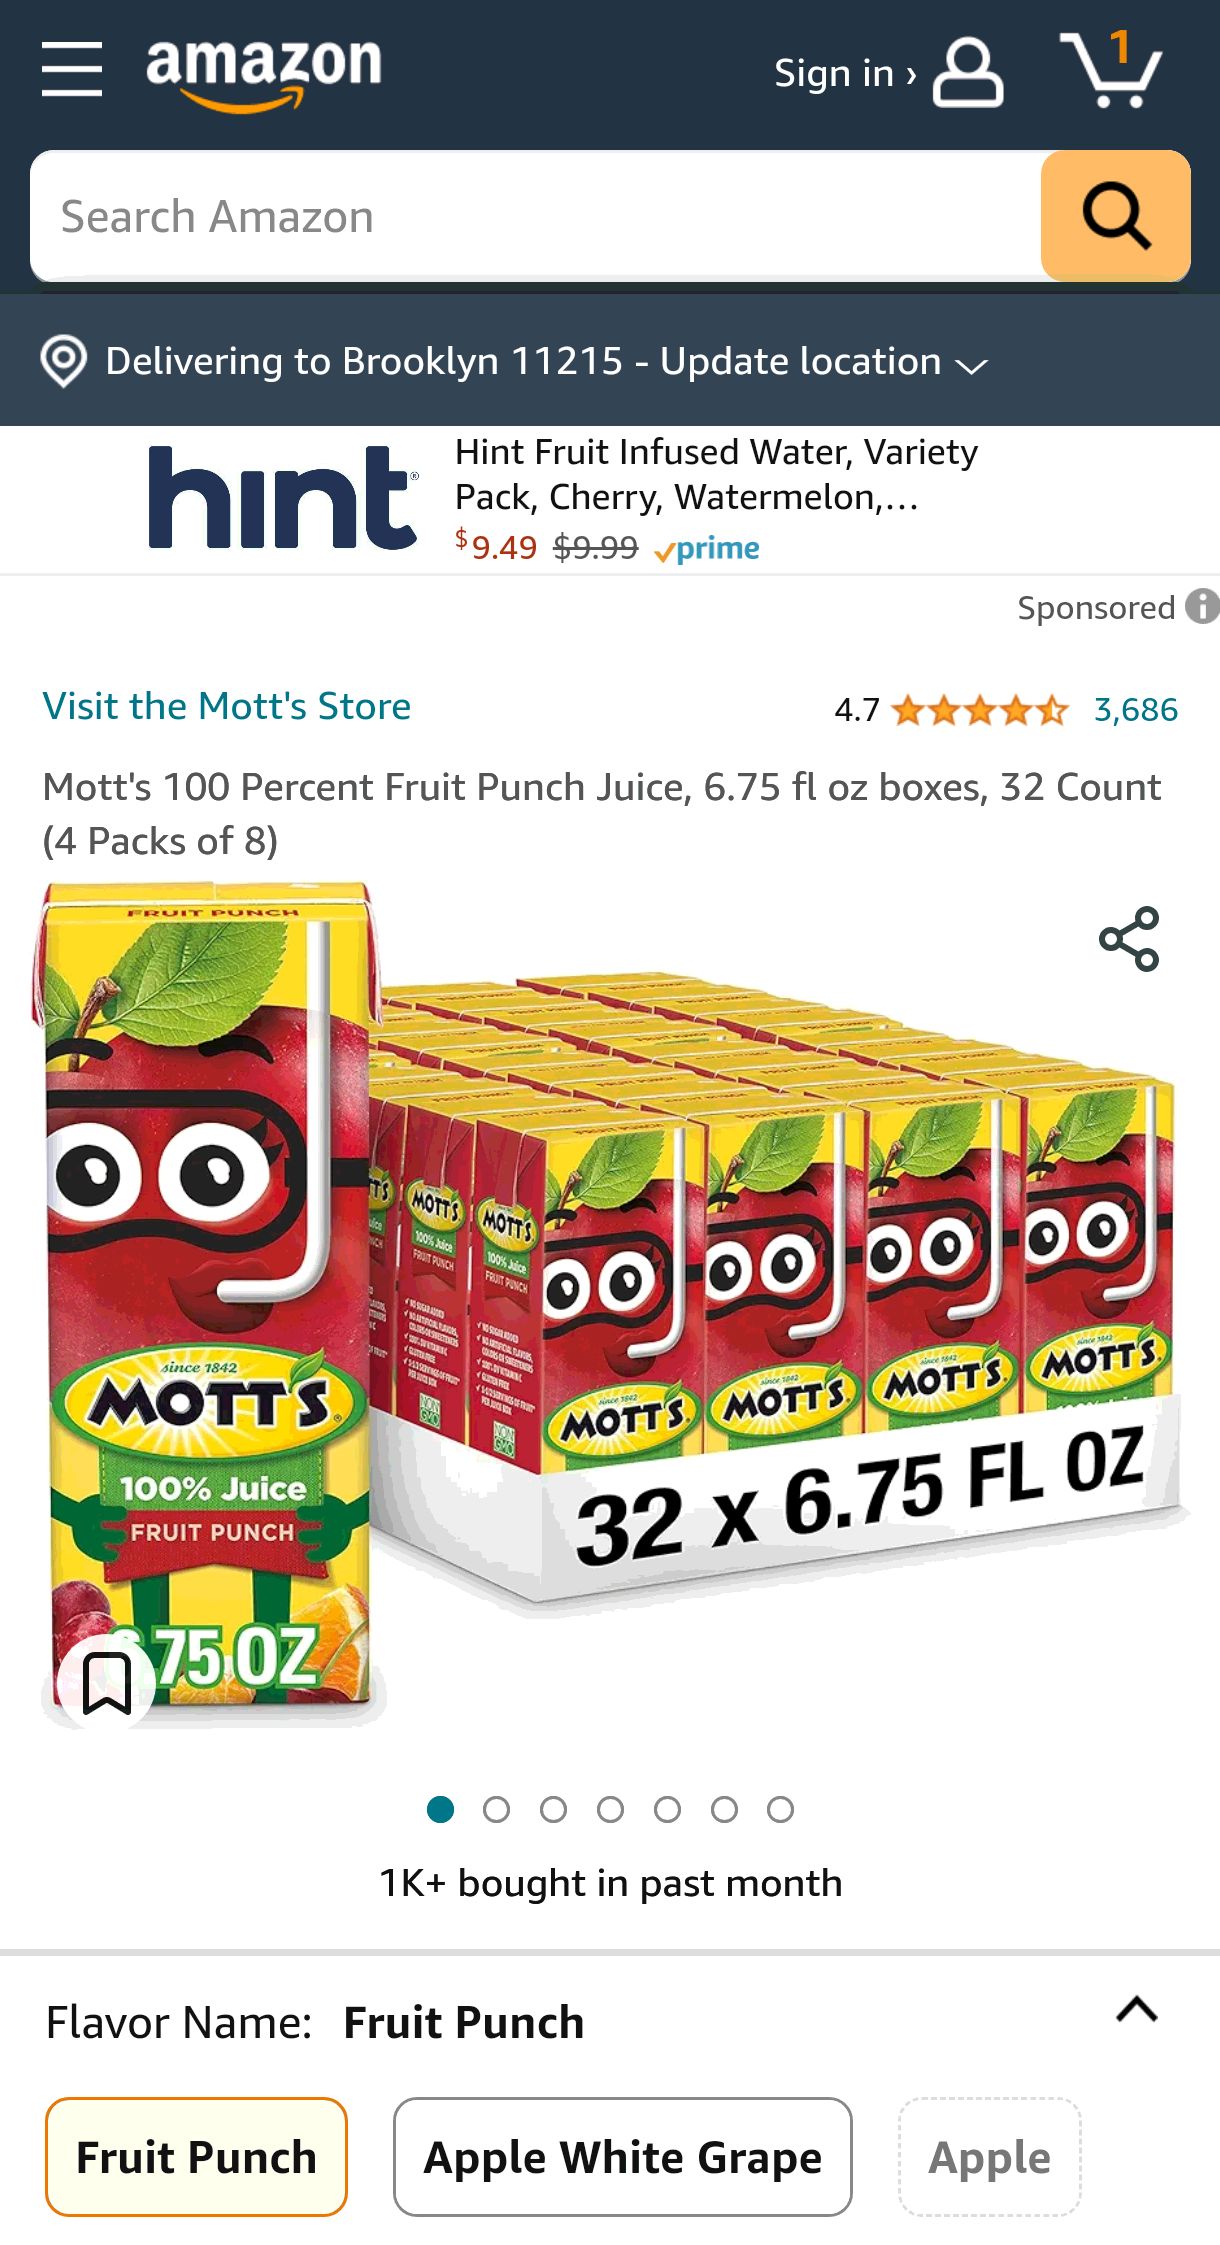 Amazon.com : Mott's 100 Percent Fruit Punch Juice, 6.75 fl oz boxes, 32 Count (4 Packs of 8) : Grocery & Gourmet Food